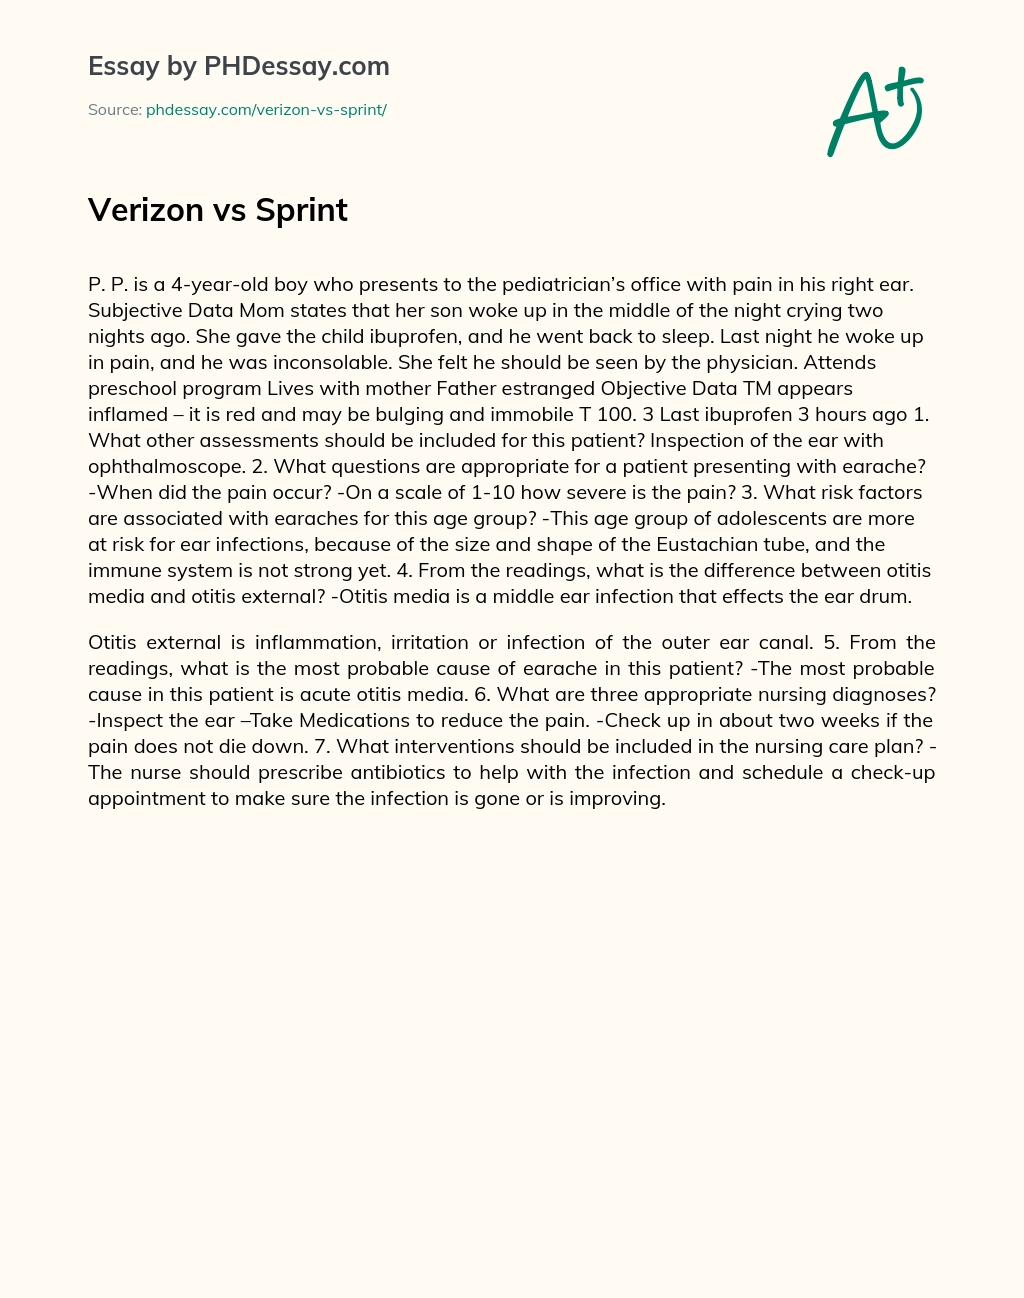 Verizon vs Sprint essay